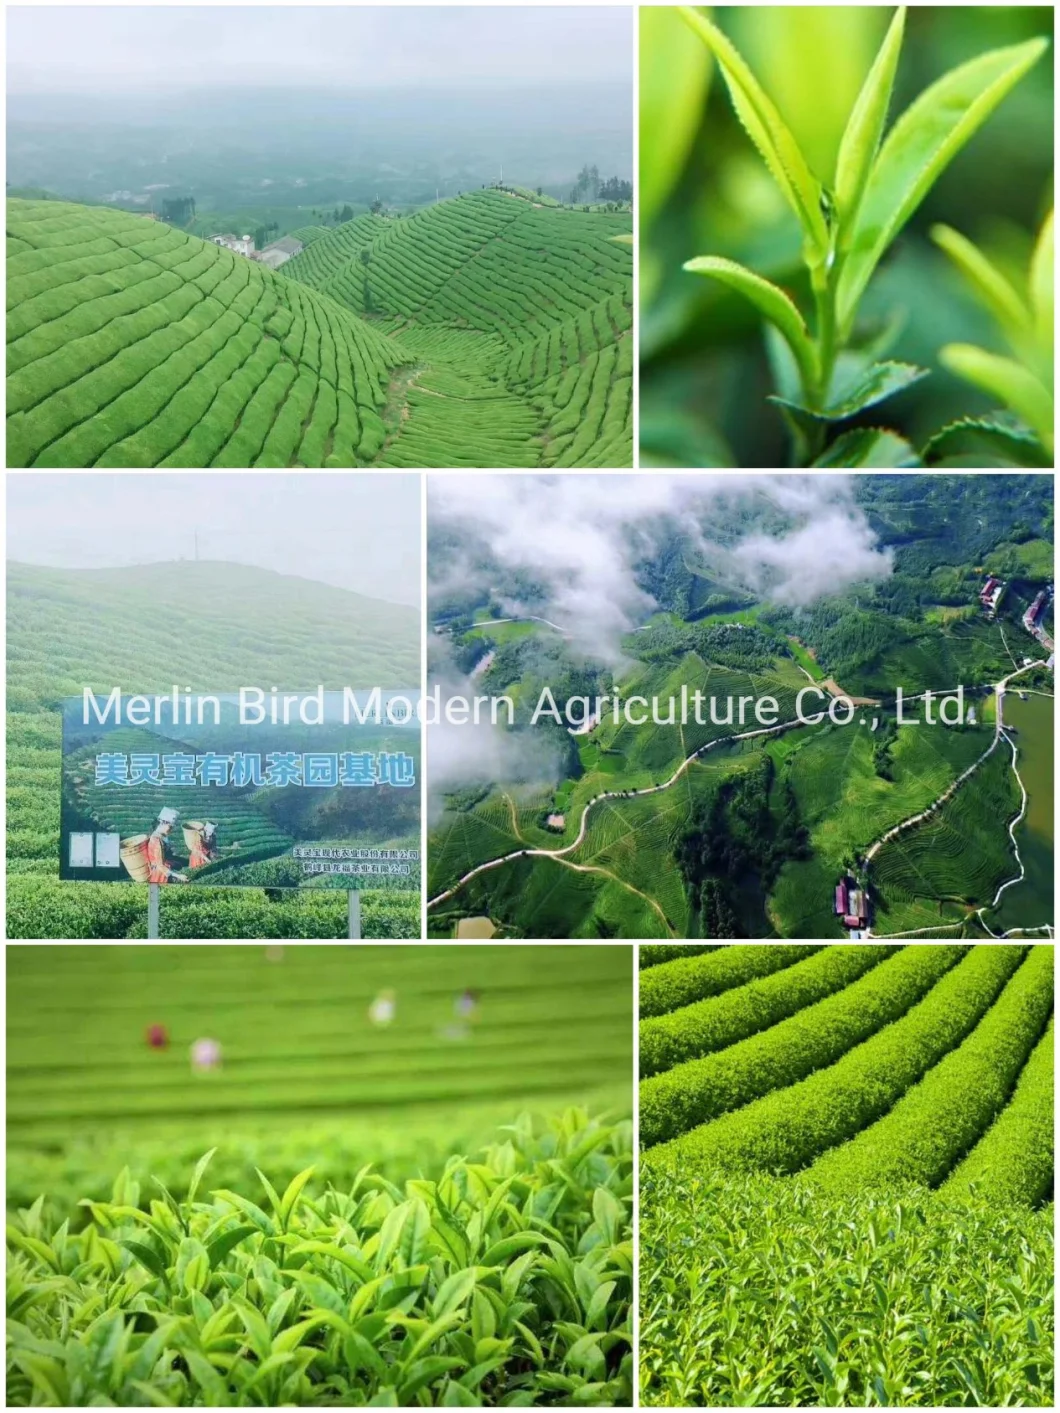 Private Labeling Organic Sleep Well Ayurvedic Herbal Tea